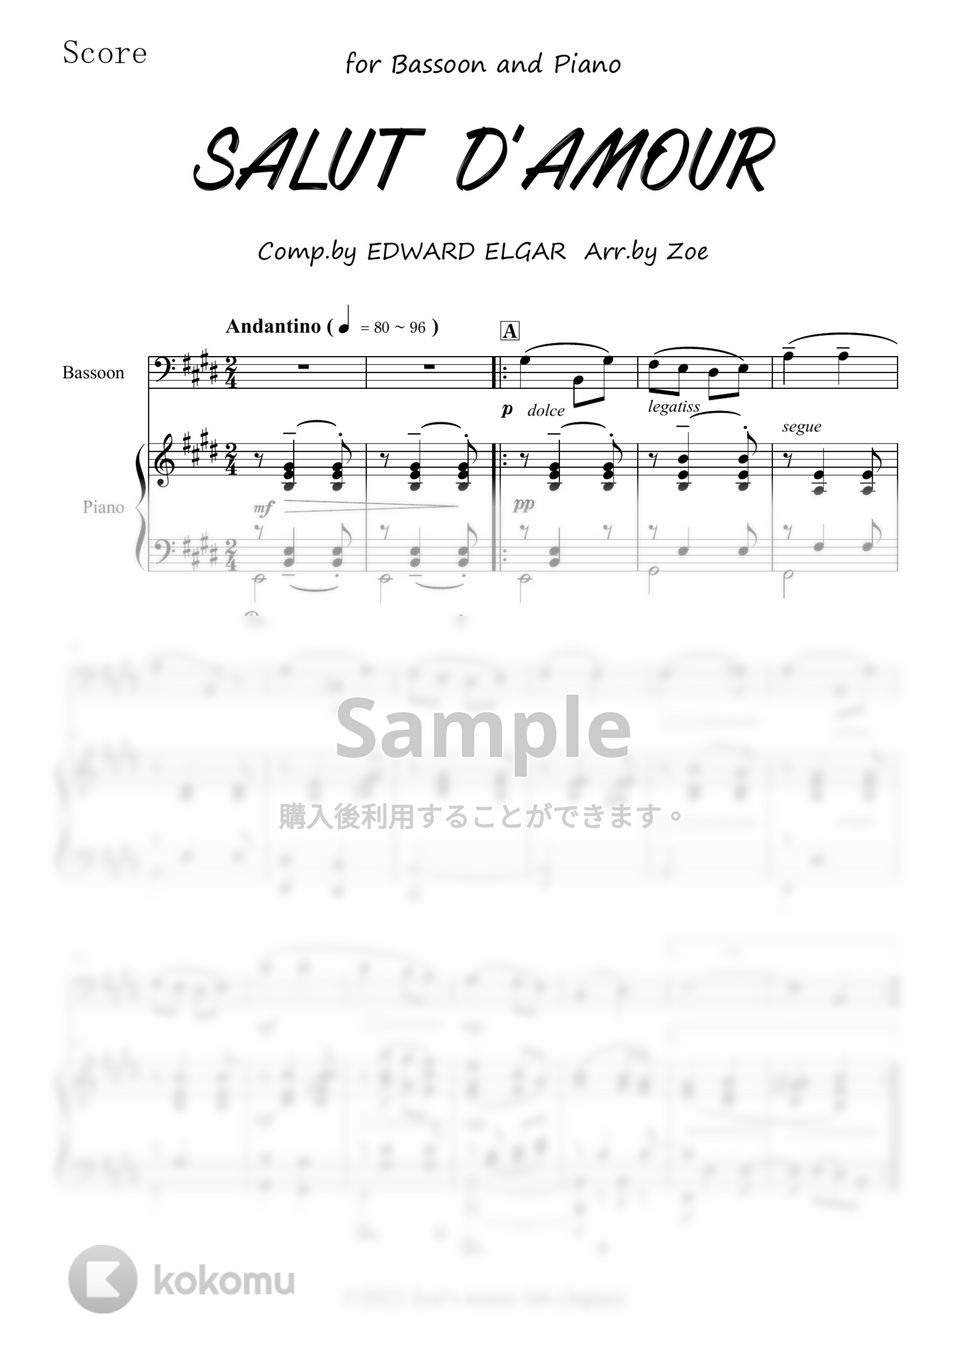 EDWARD ELGAR - 愛の挨拶 / SALUT D'AMOUR for Bassoon and Piano (原調版) (ファゴット/エルガー/ピアノ/バスーン) by Zoe